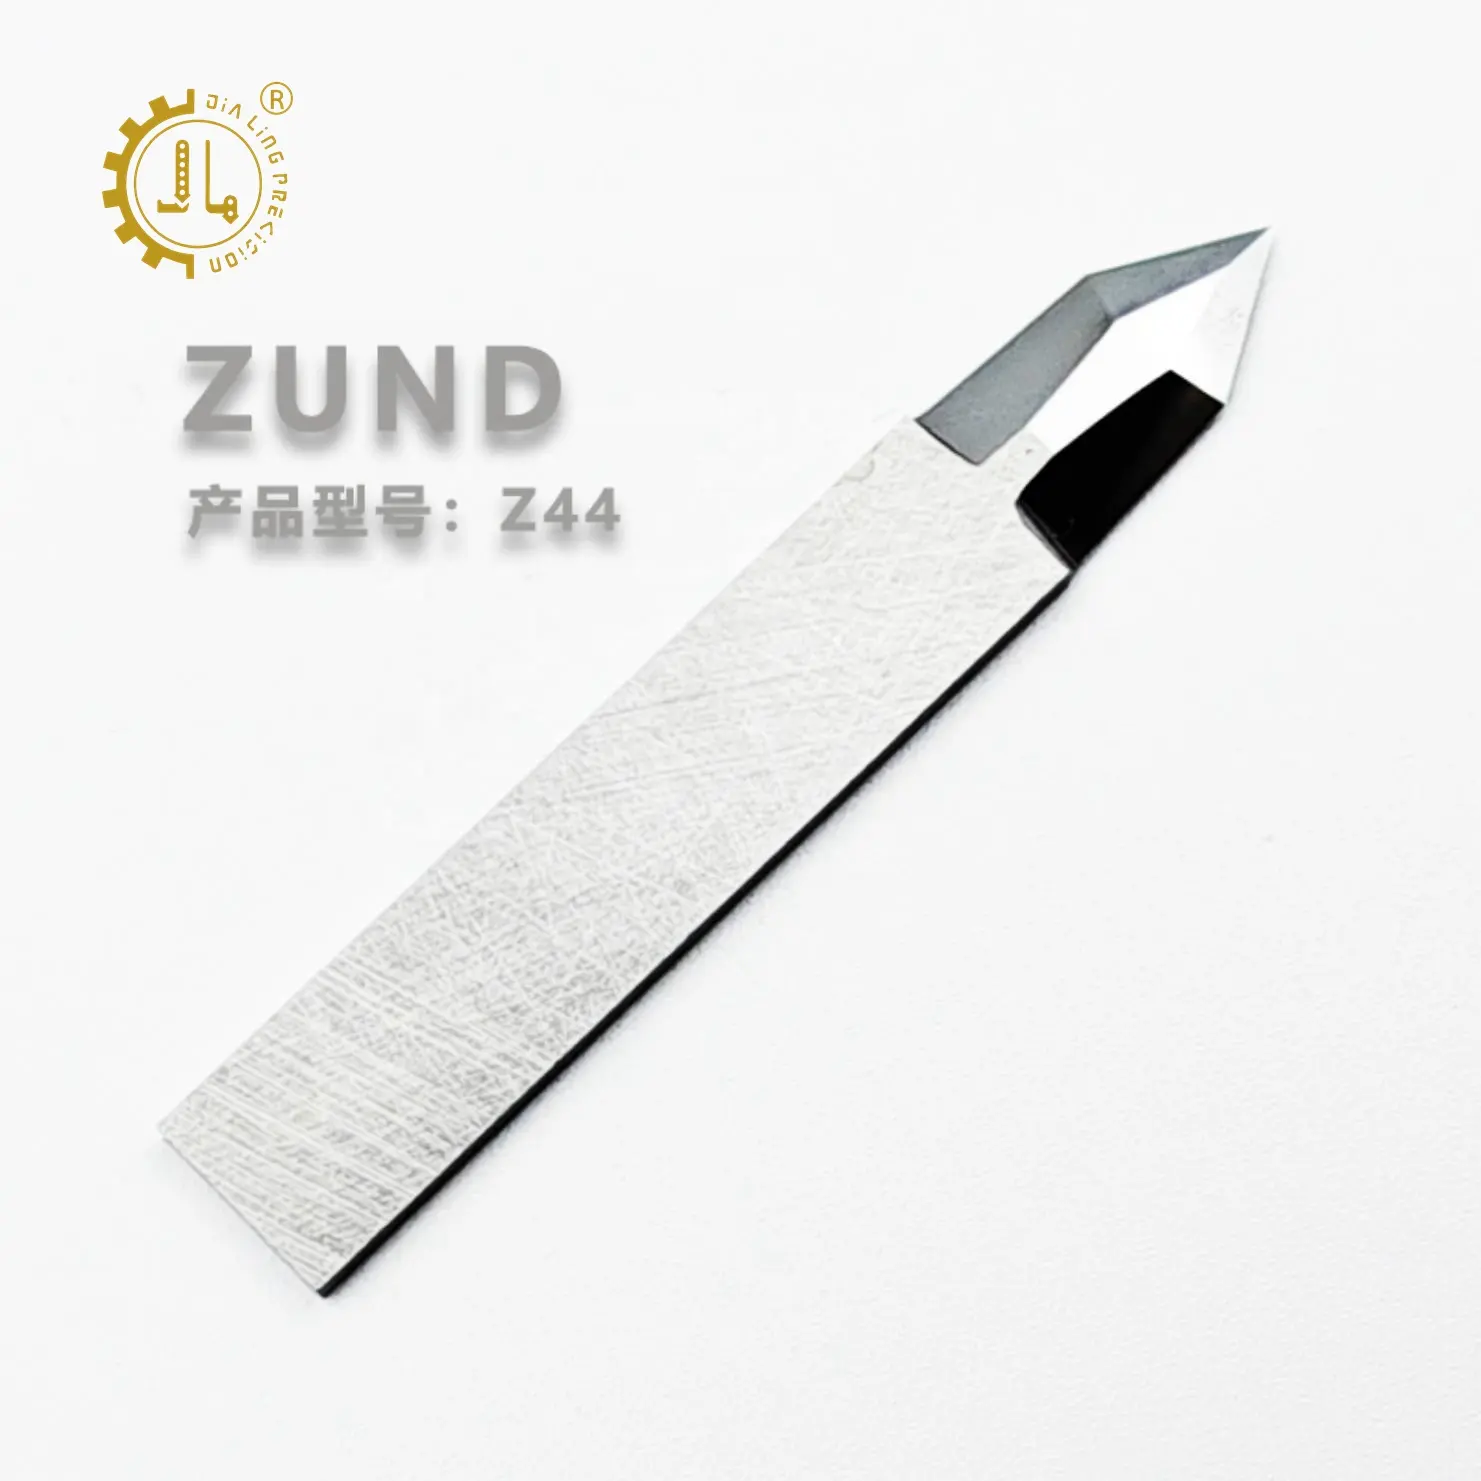 ZUND Cutter Z12 25 mm CNC Hoja oscilante de carburo ZUND Cuchillo cortador digital Z12 Z13 Z10 Z11 Z83 Z101 Z44